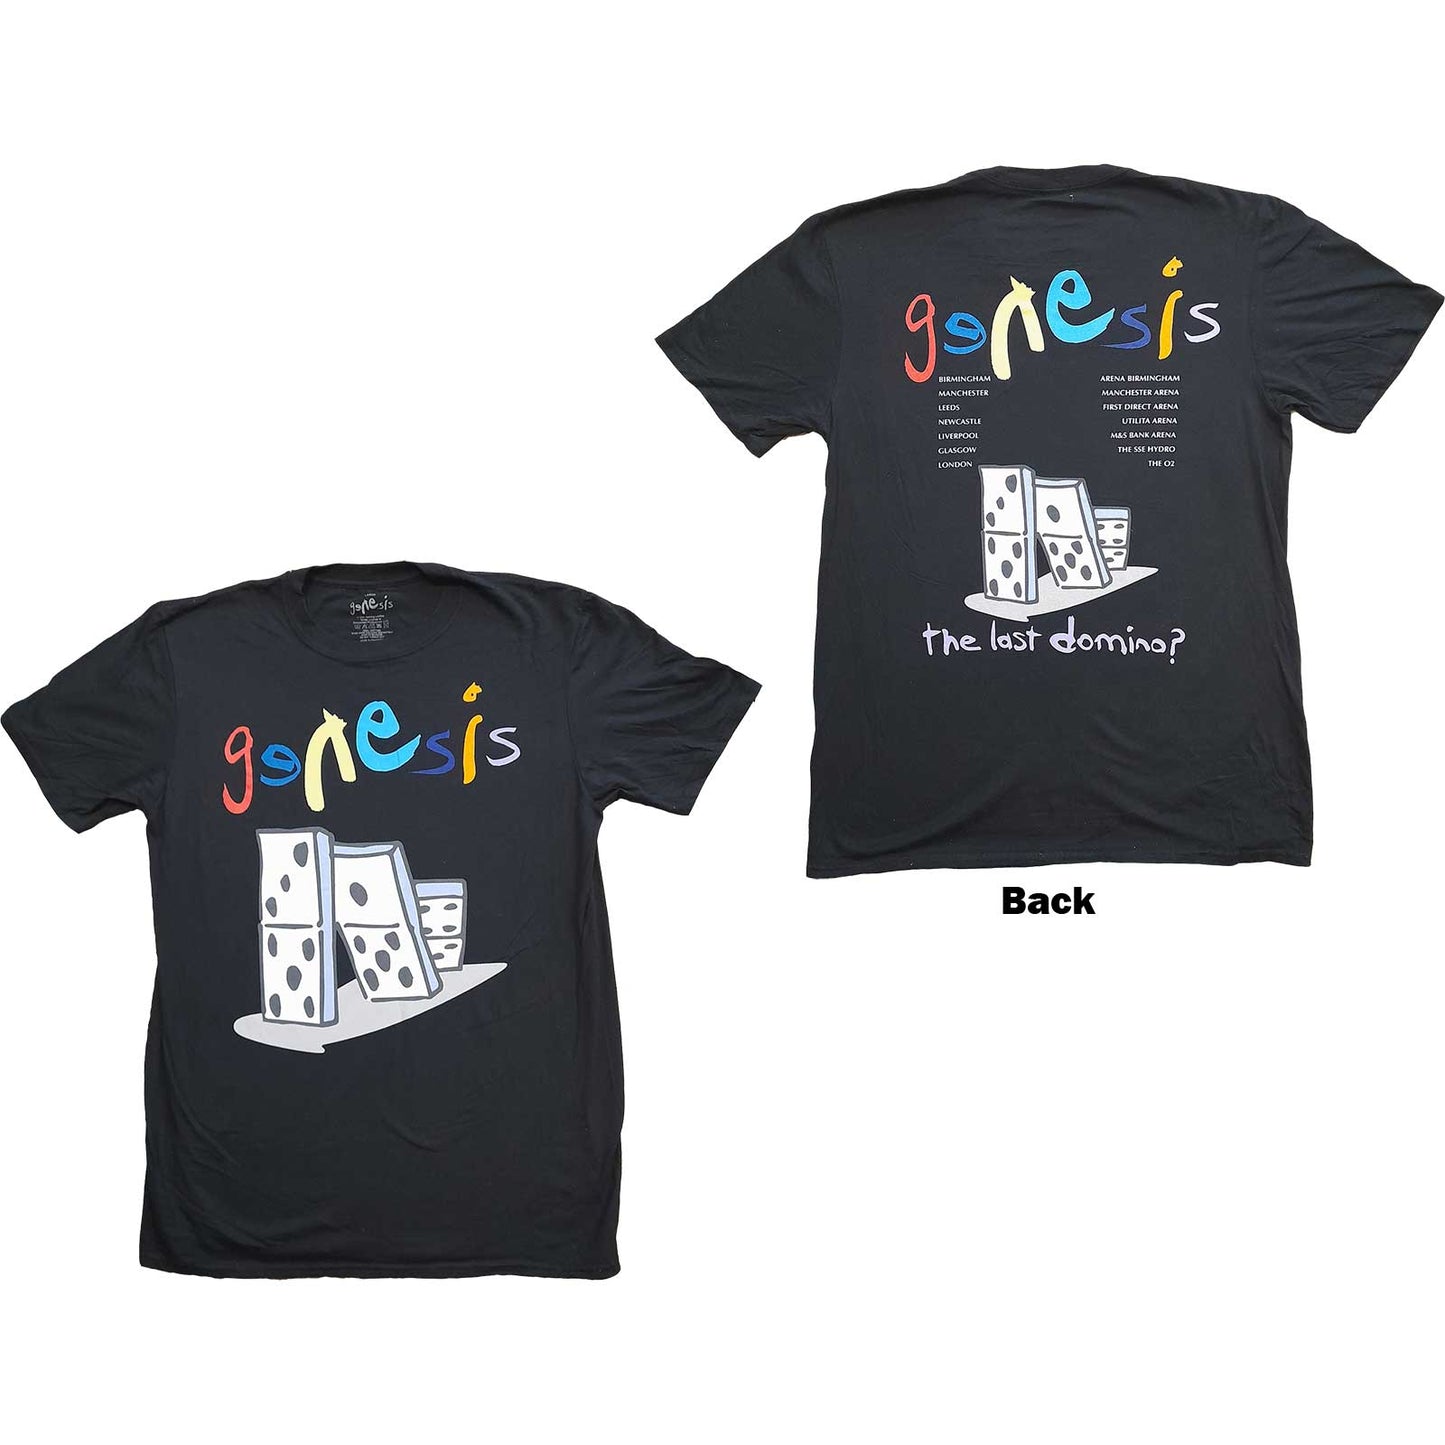 Genesis T-Shirt: The Last Domino?